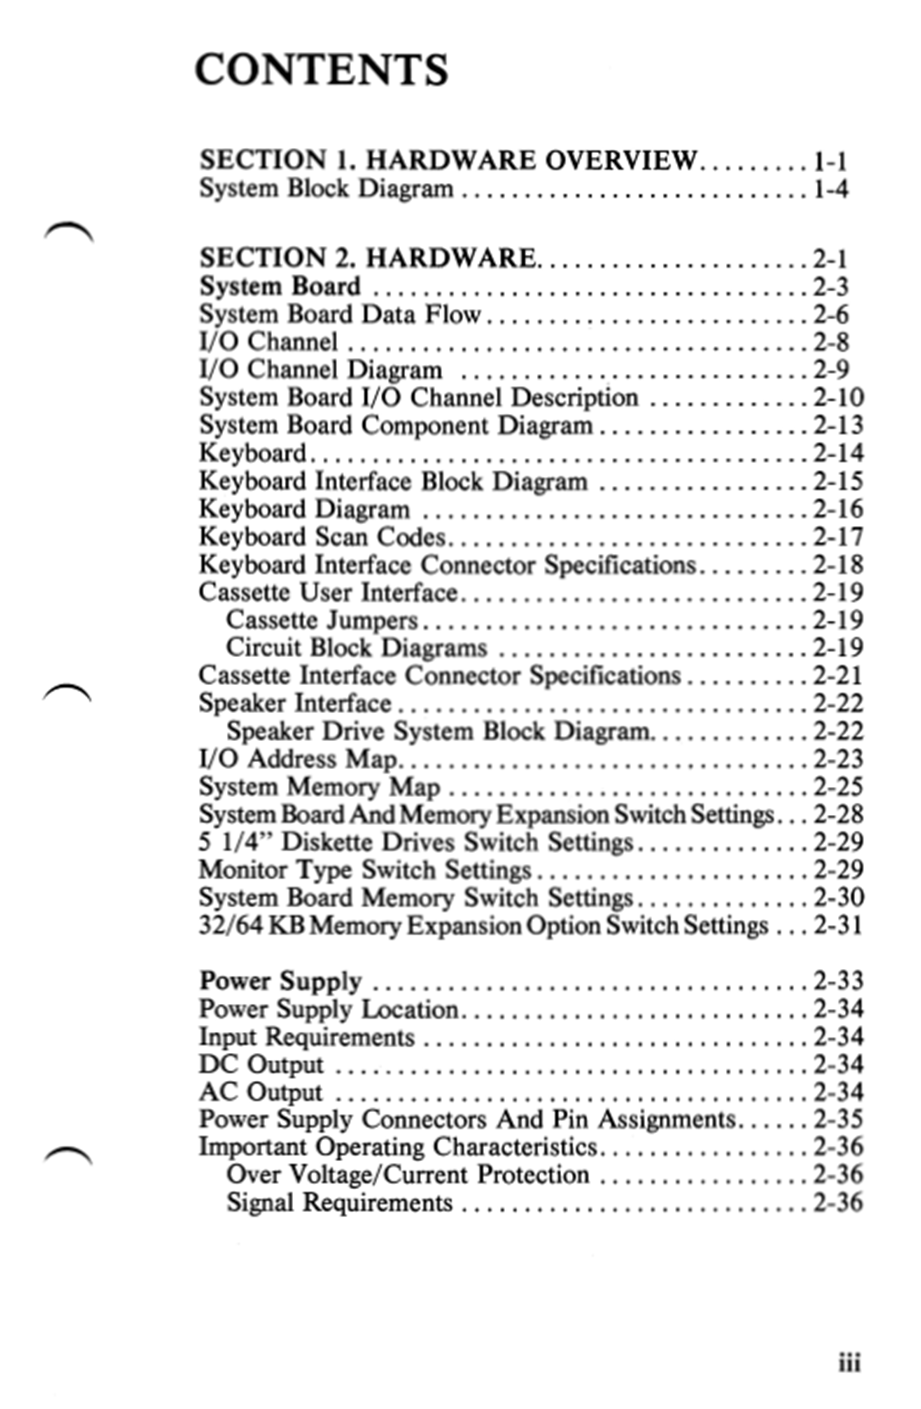 IBM PC Spec - Table of contents.